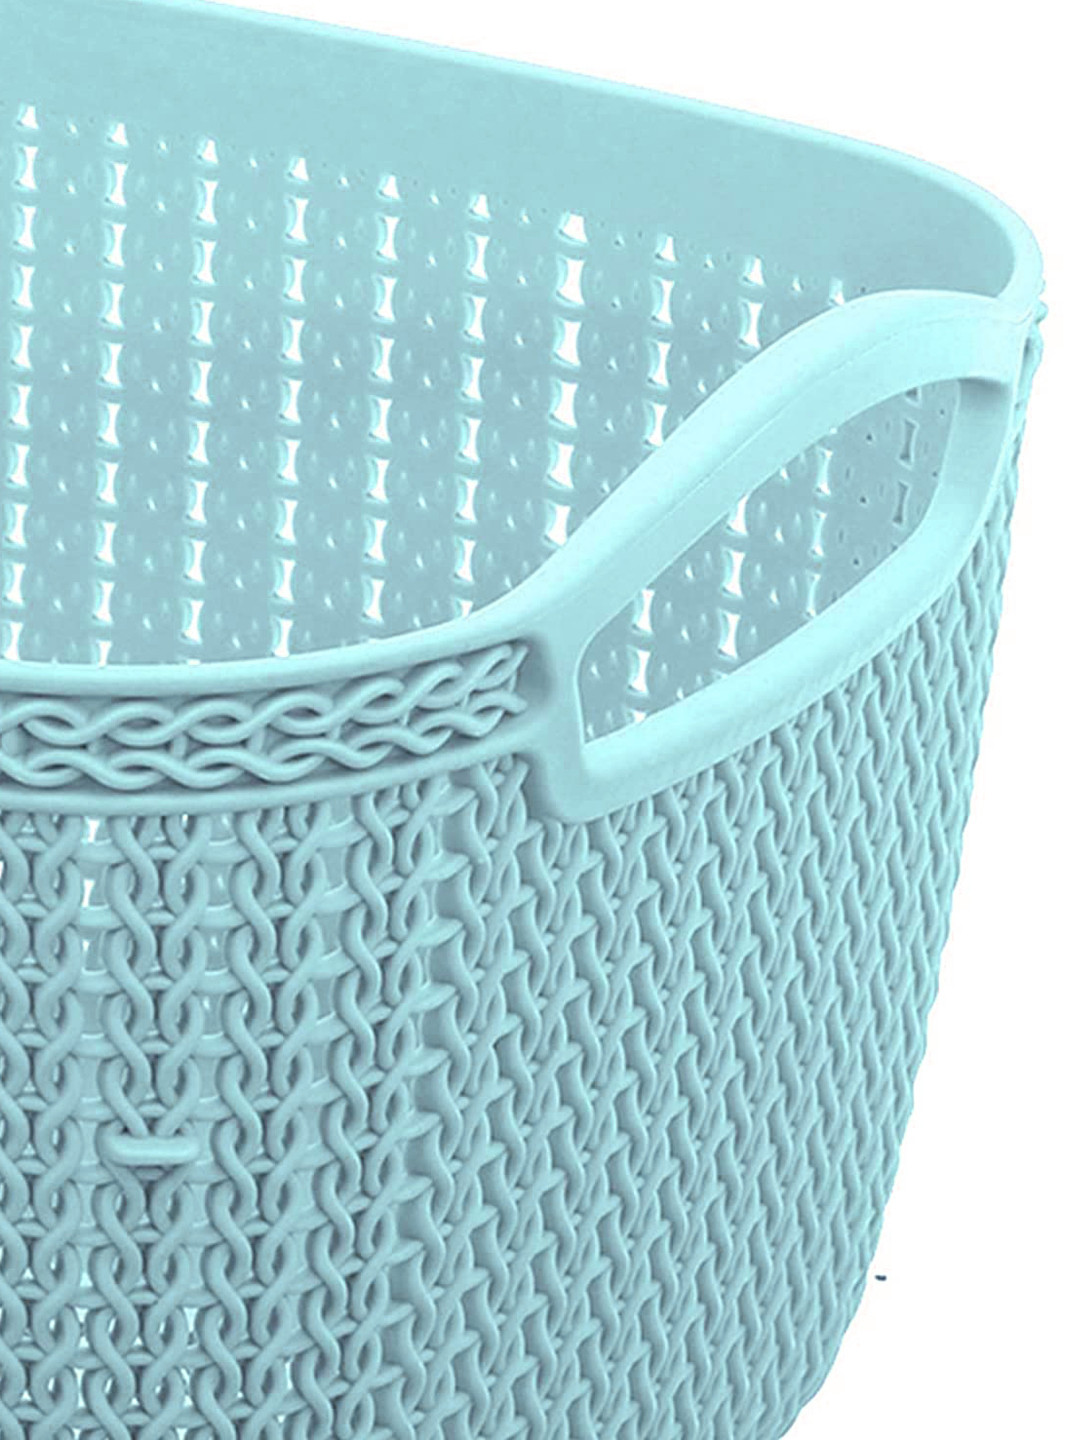 Kuber Industries Q-6 Unbreakable Plastic Multipurpose Large Size Flexible Storage Baskets/Fruit Vegetable Bathroom Stationary Home Basket with Handles (Light Blue & Grey)